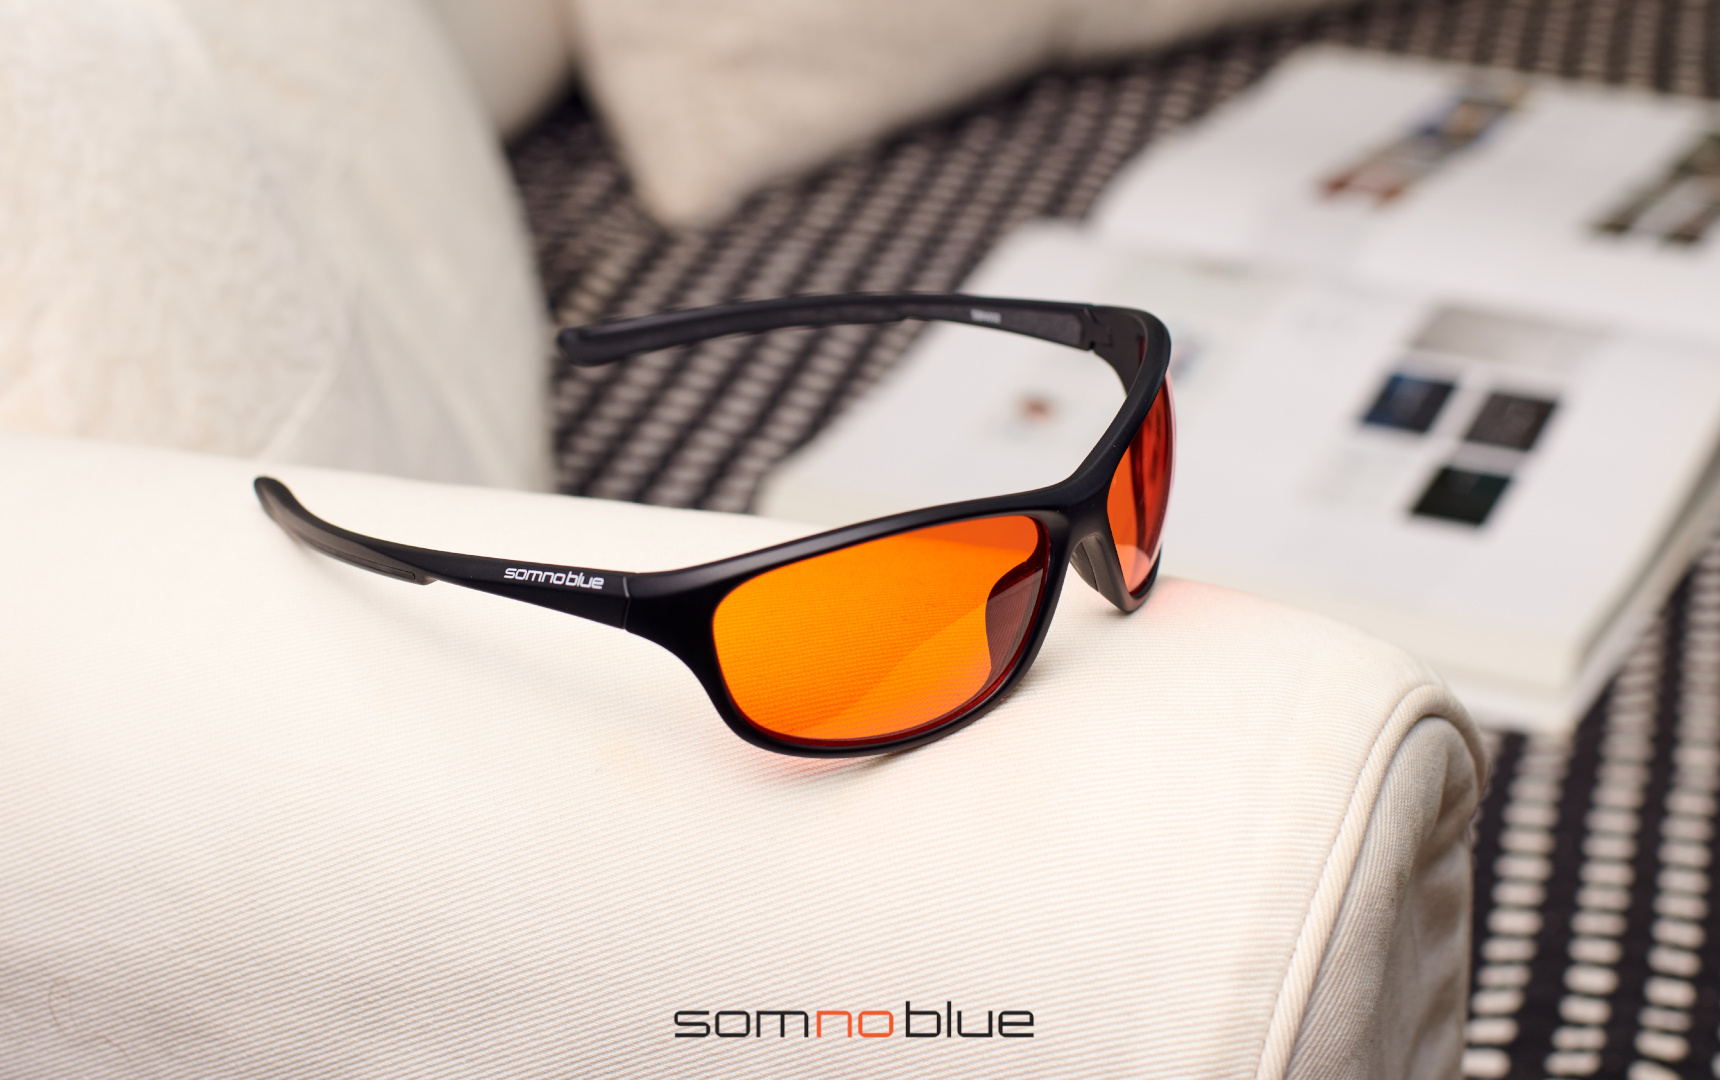 Somnoblue blue light blocking sleep glasses SB-3 PLus - Copy